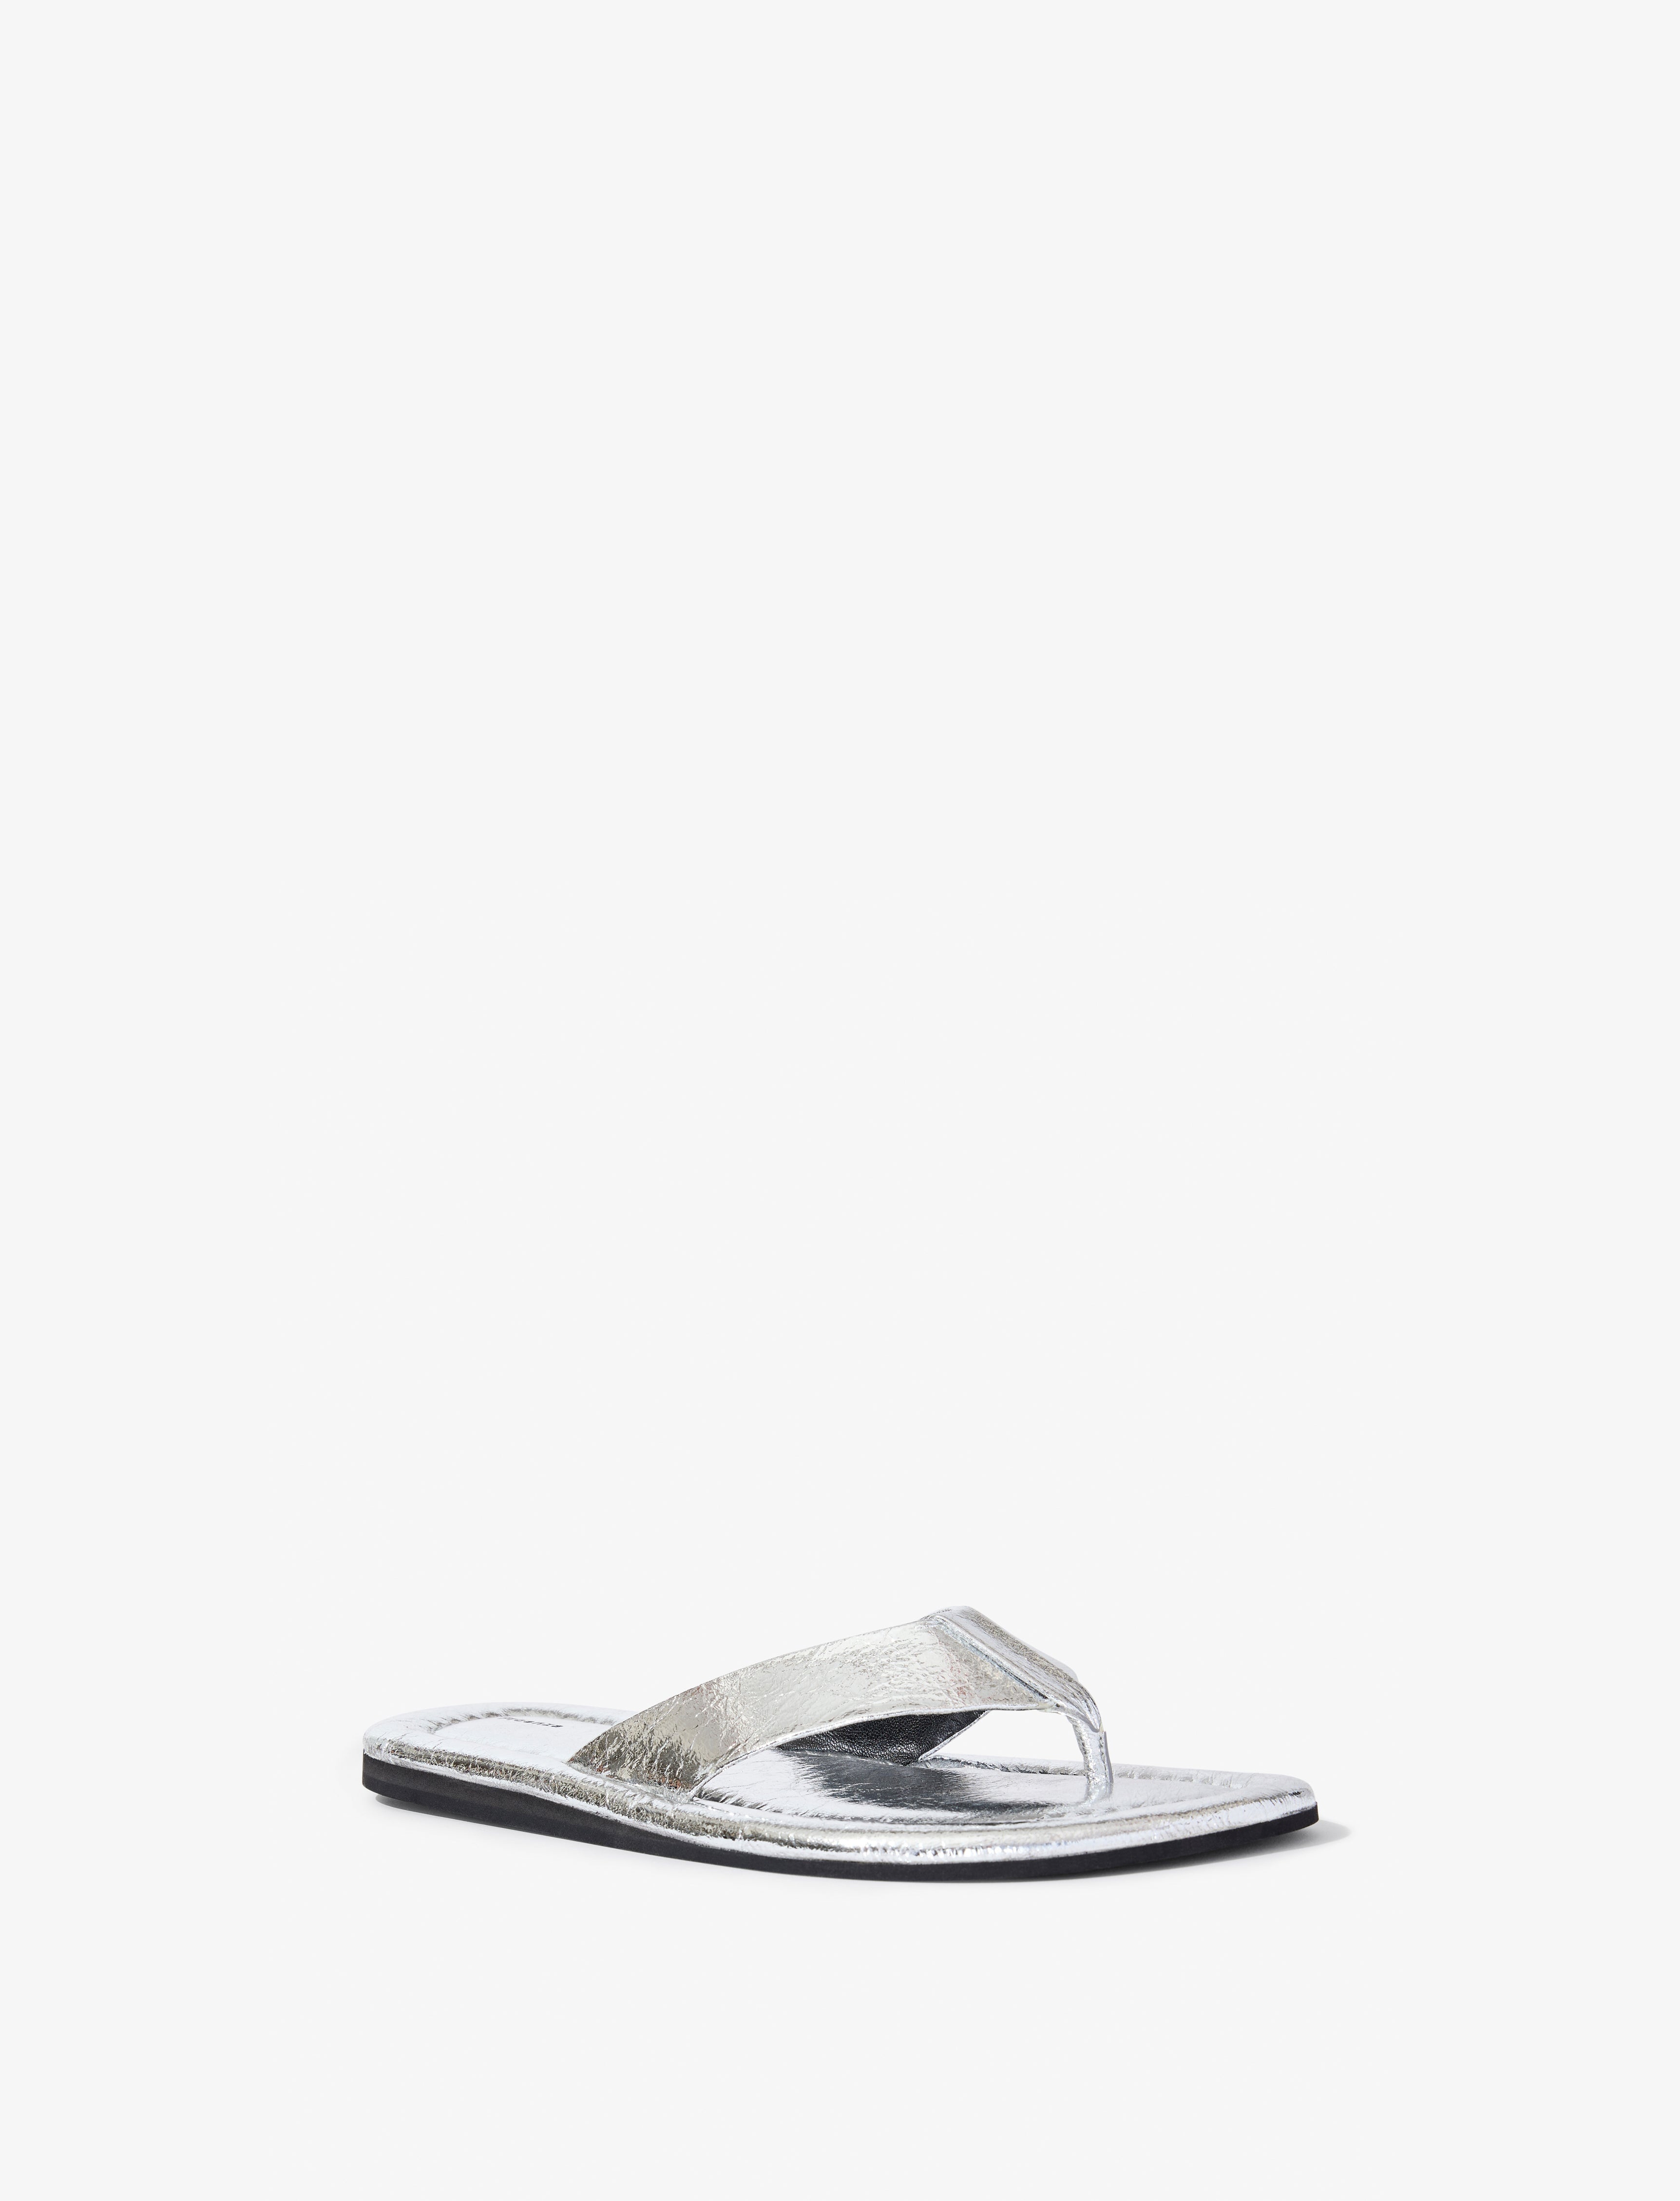 Cooper Flip Flop Sandals in Crinkled Metallic - 2